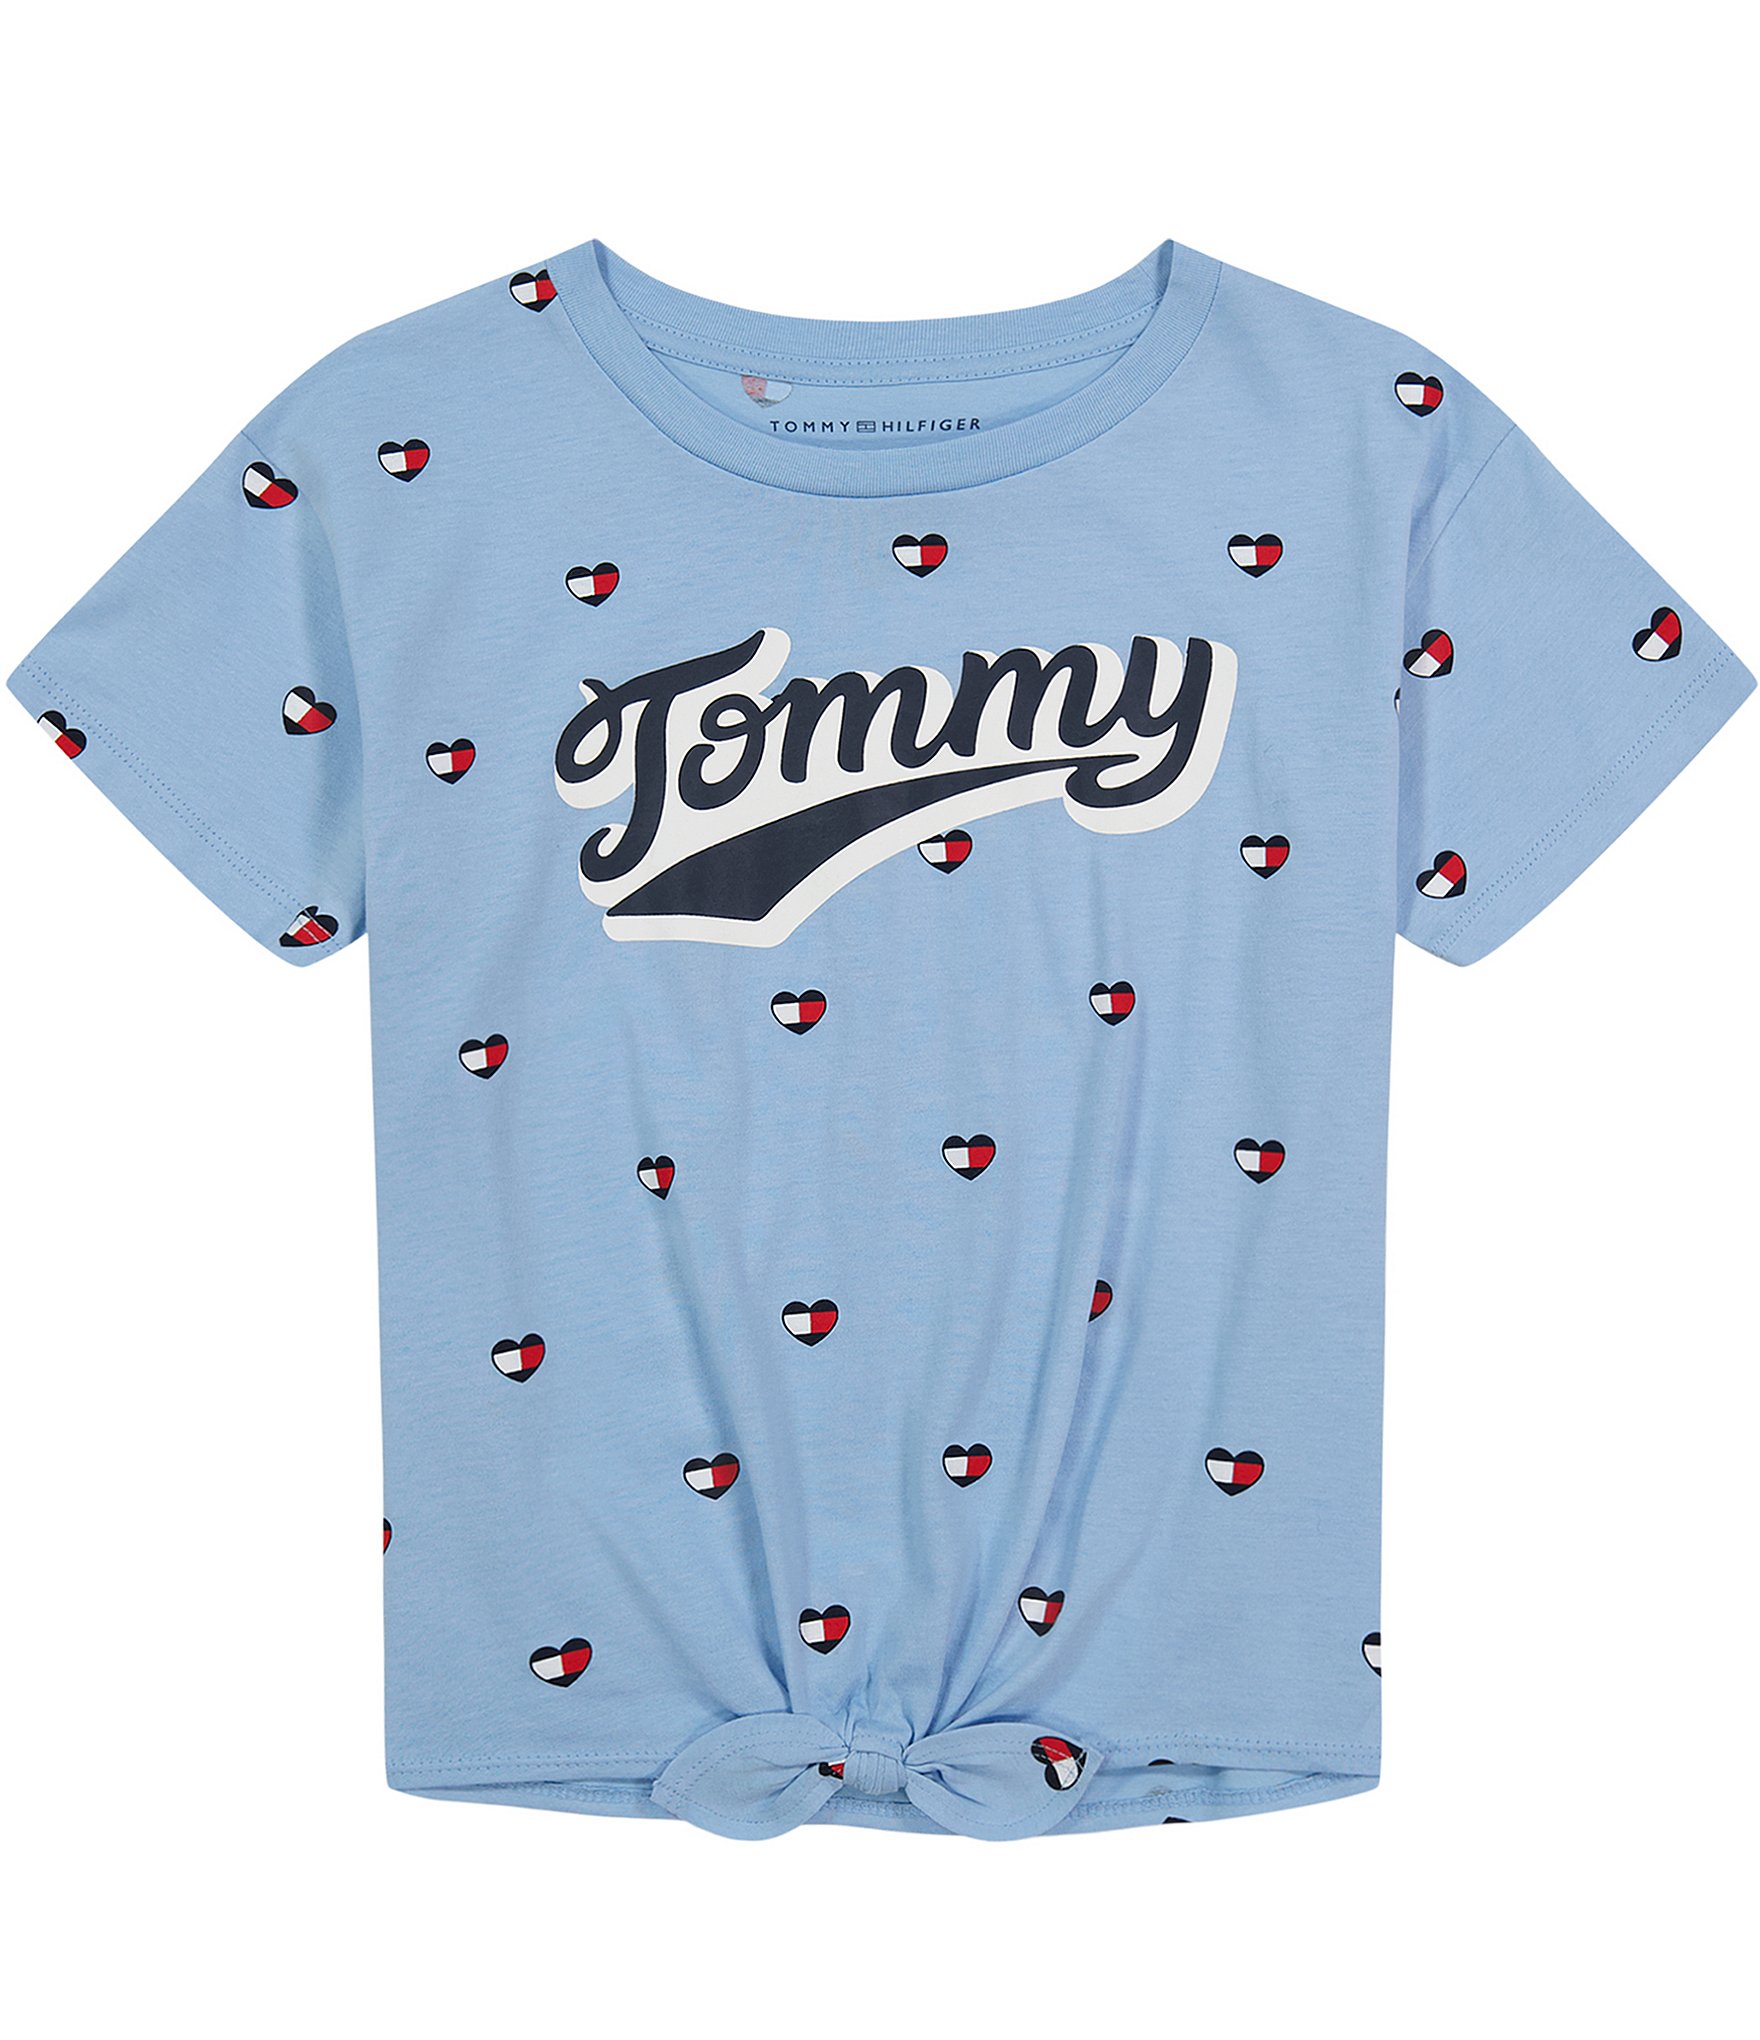 Kids' Tommy Heart T-Shirt